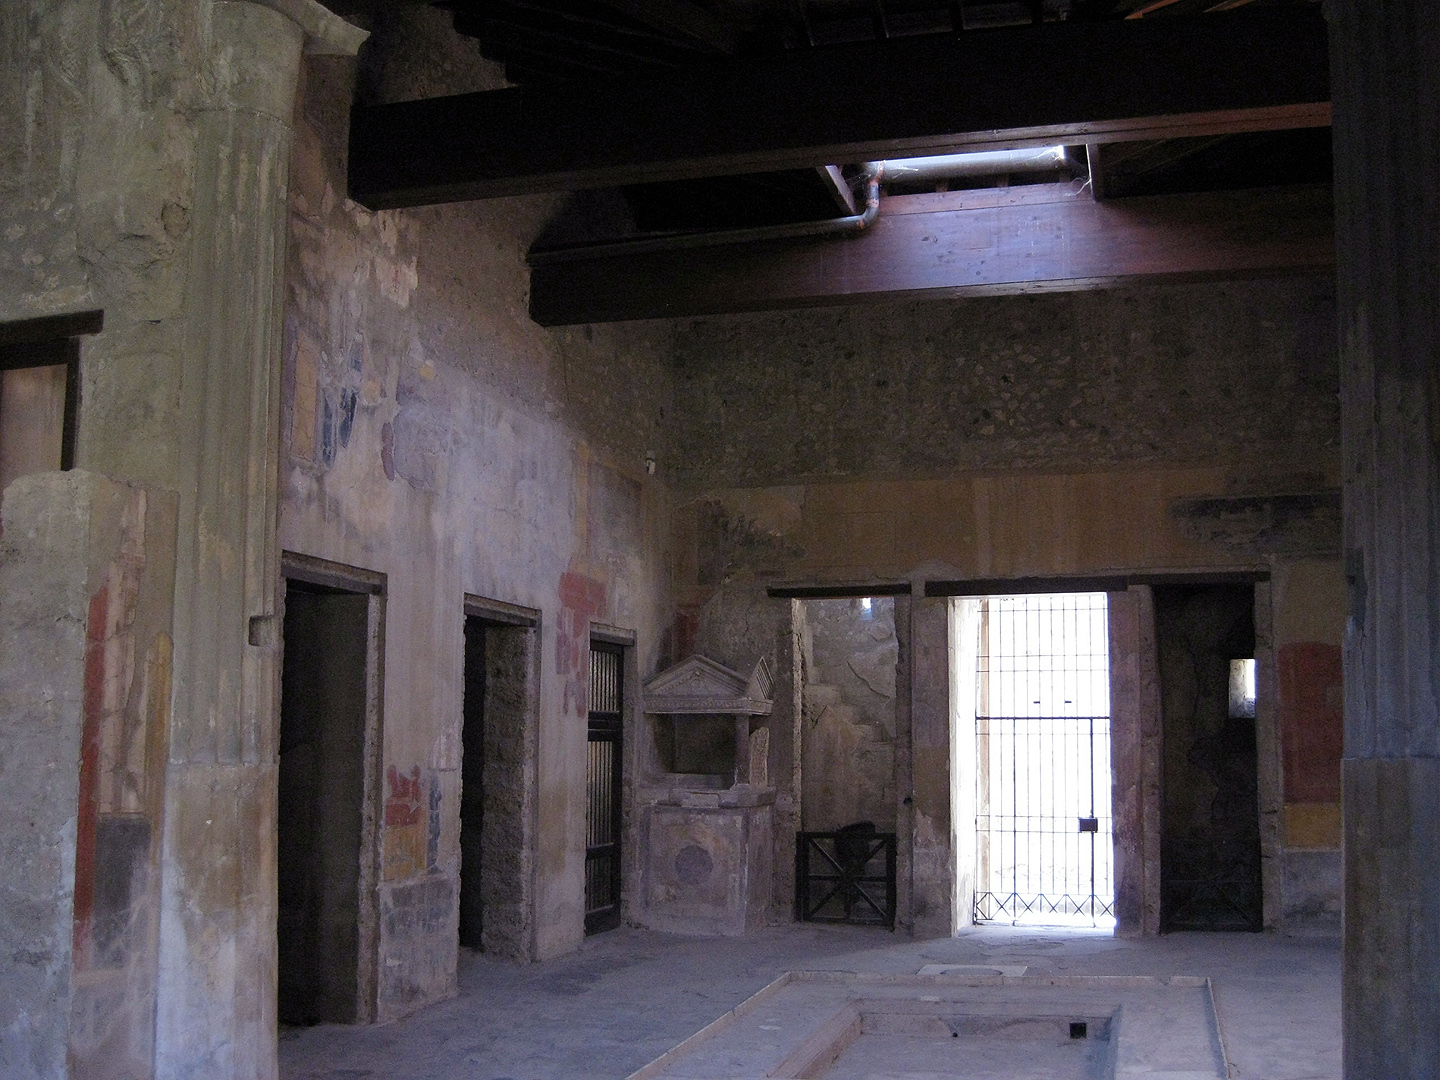 Huis van Menander, Pompeii, Campani, Itali, House of the Menander, Pompeii